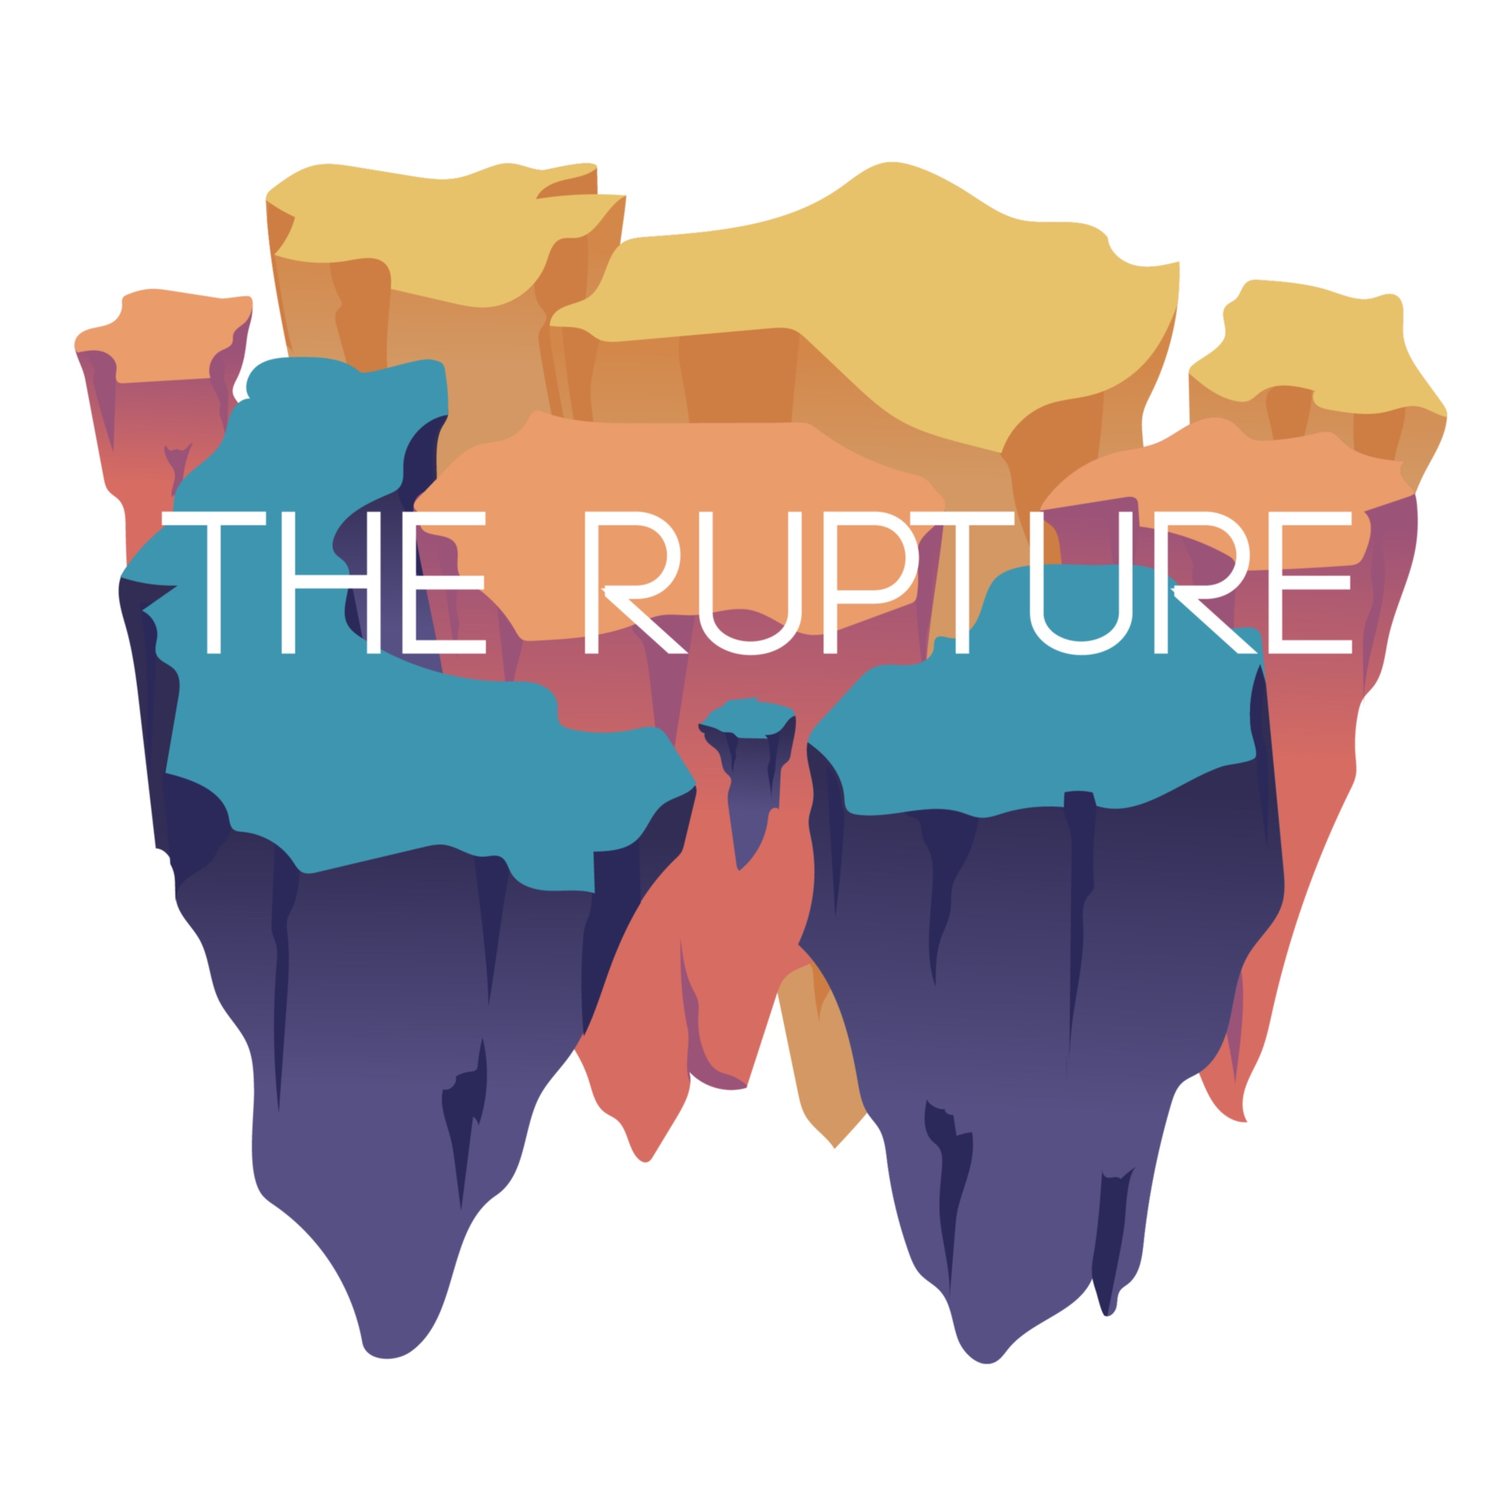 The Rupture